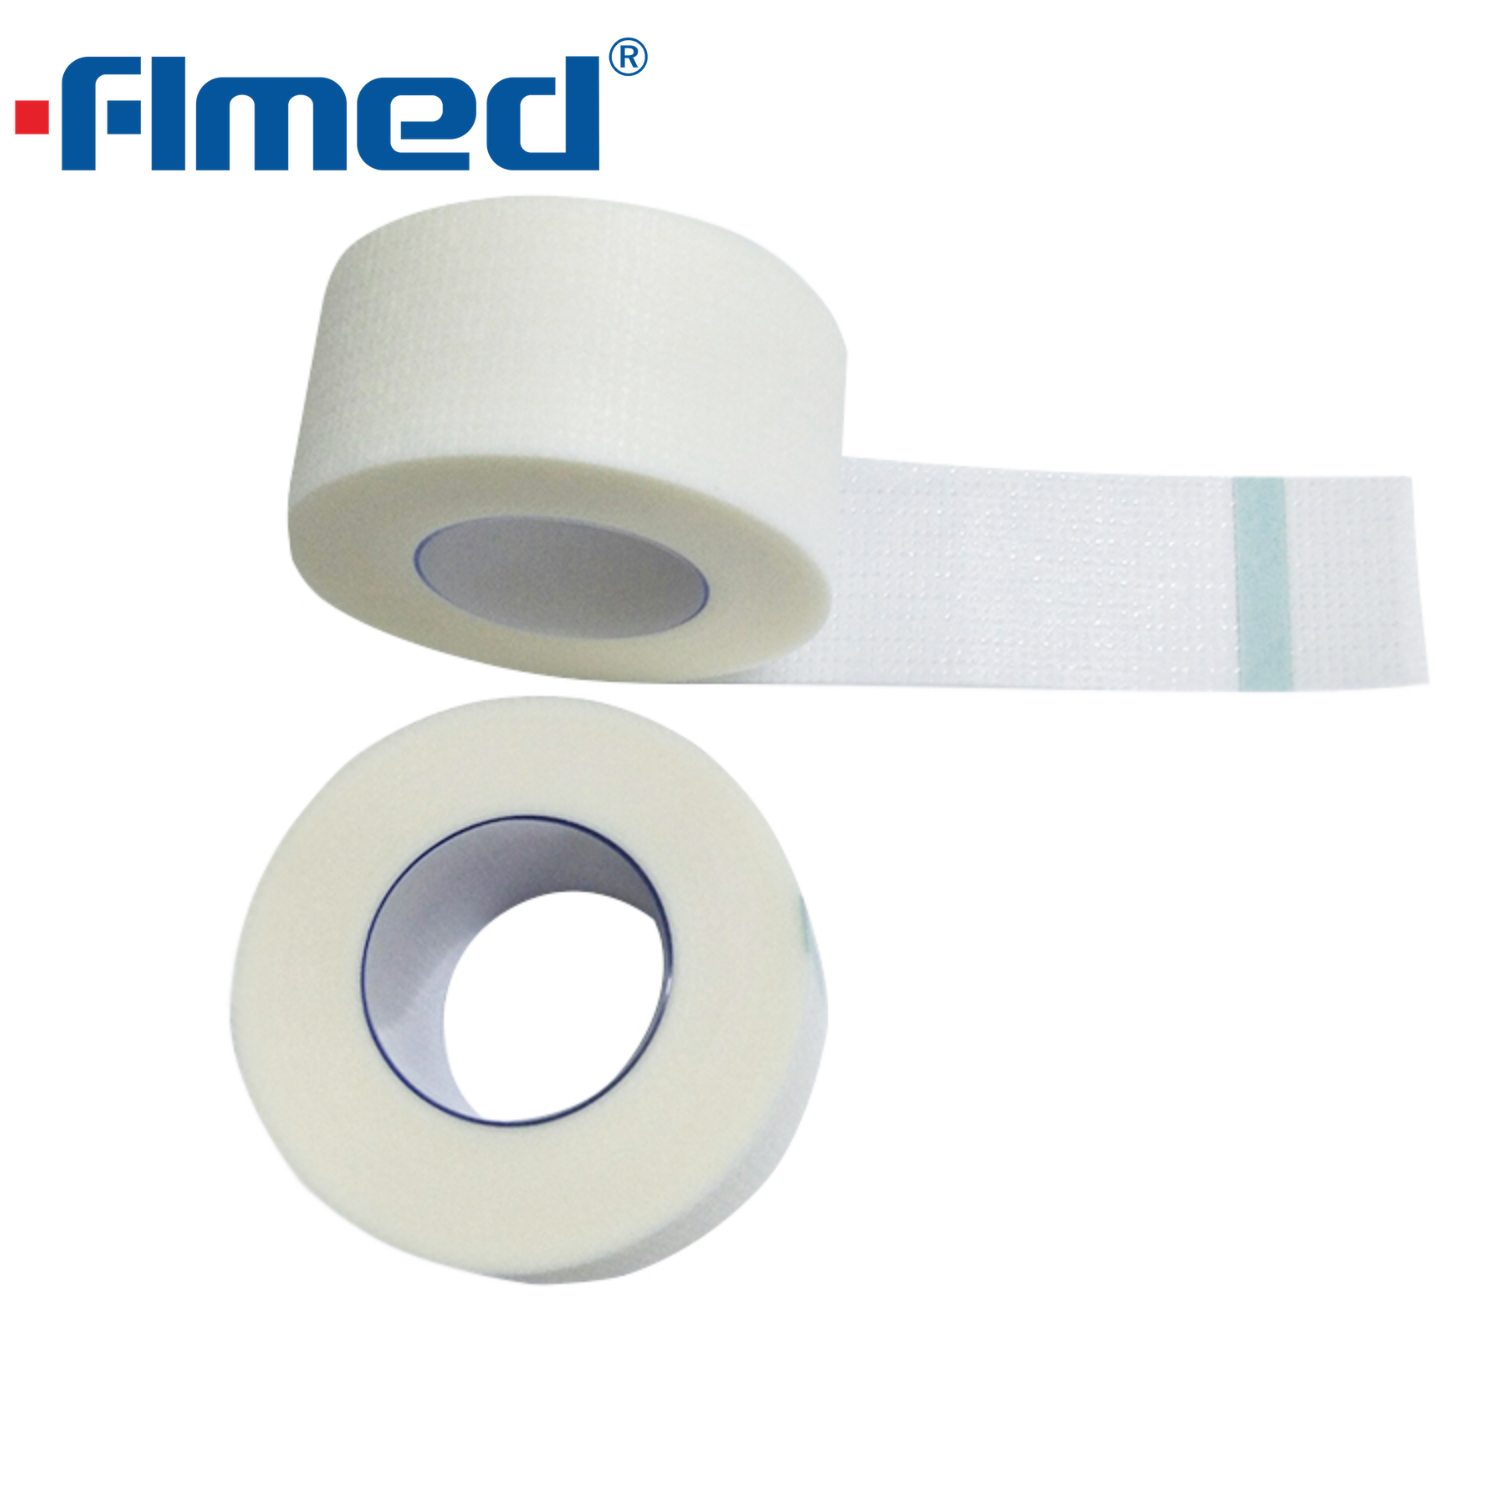 Medical Cotton Adhesive Tape China Factory - China Tape, Cotton